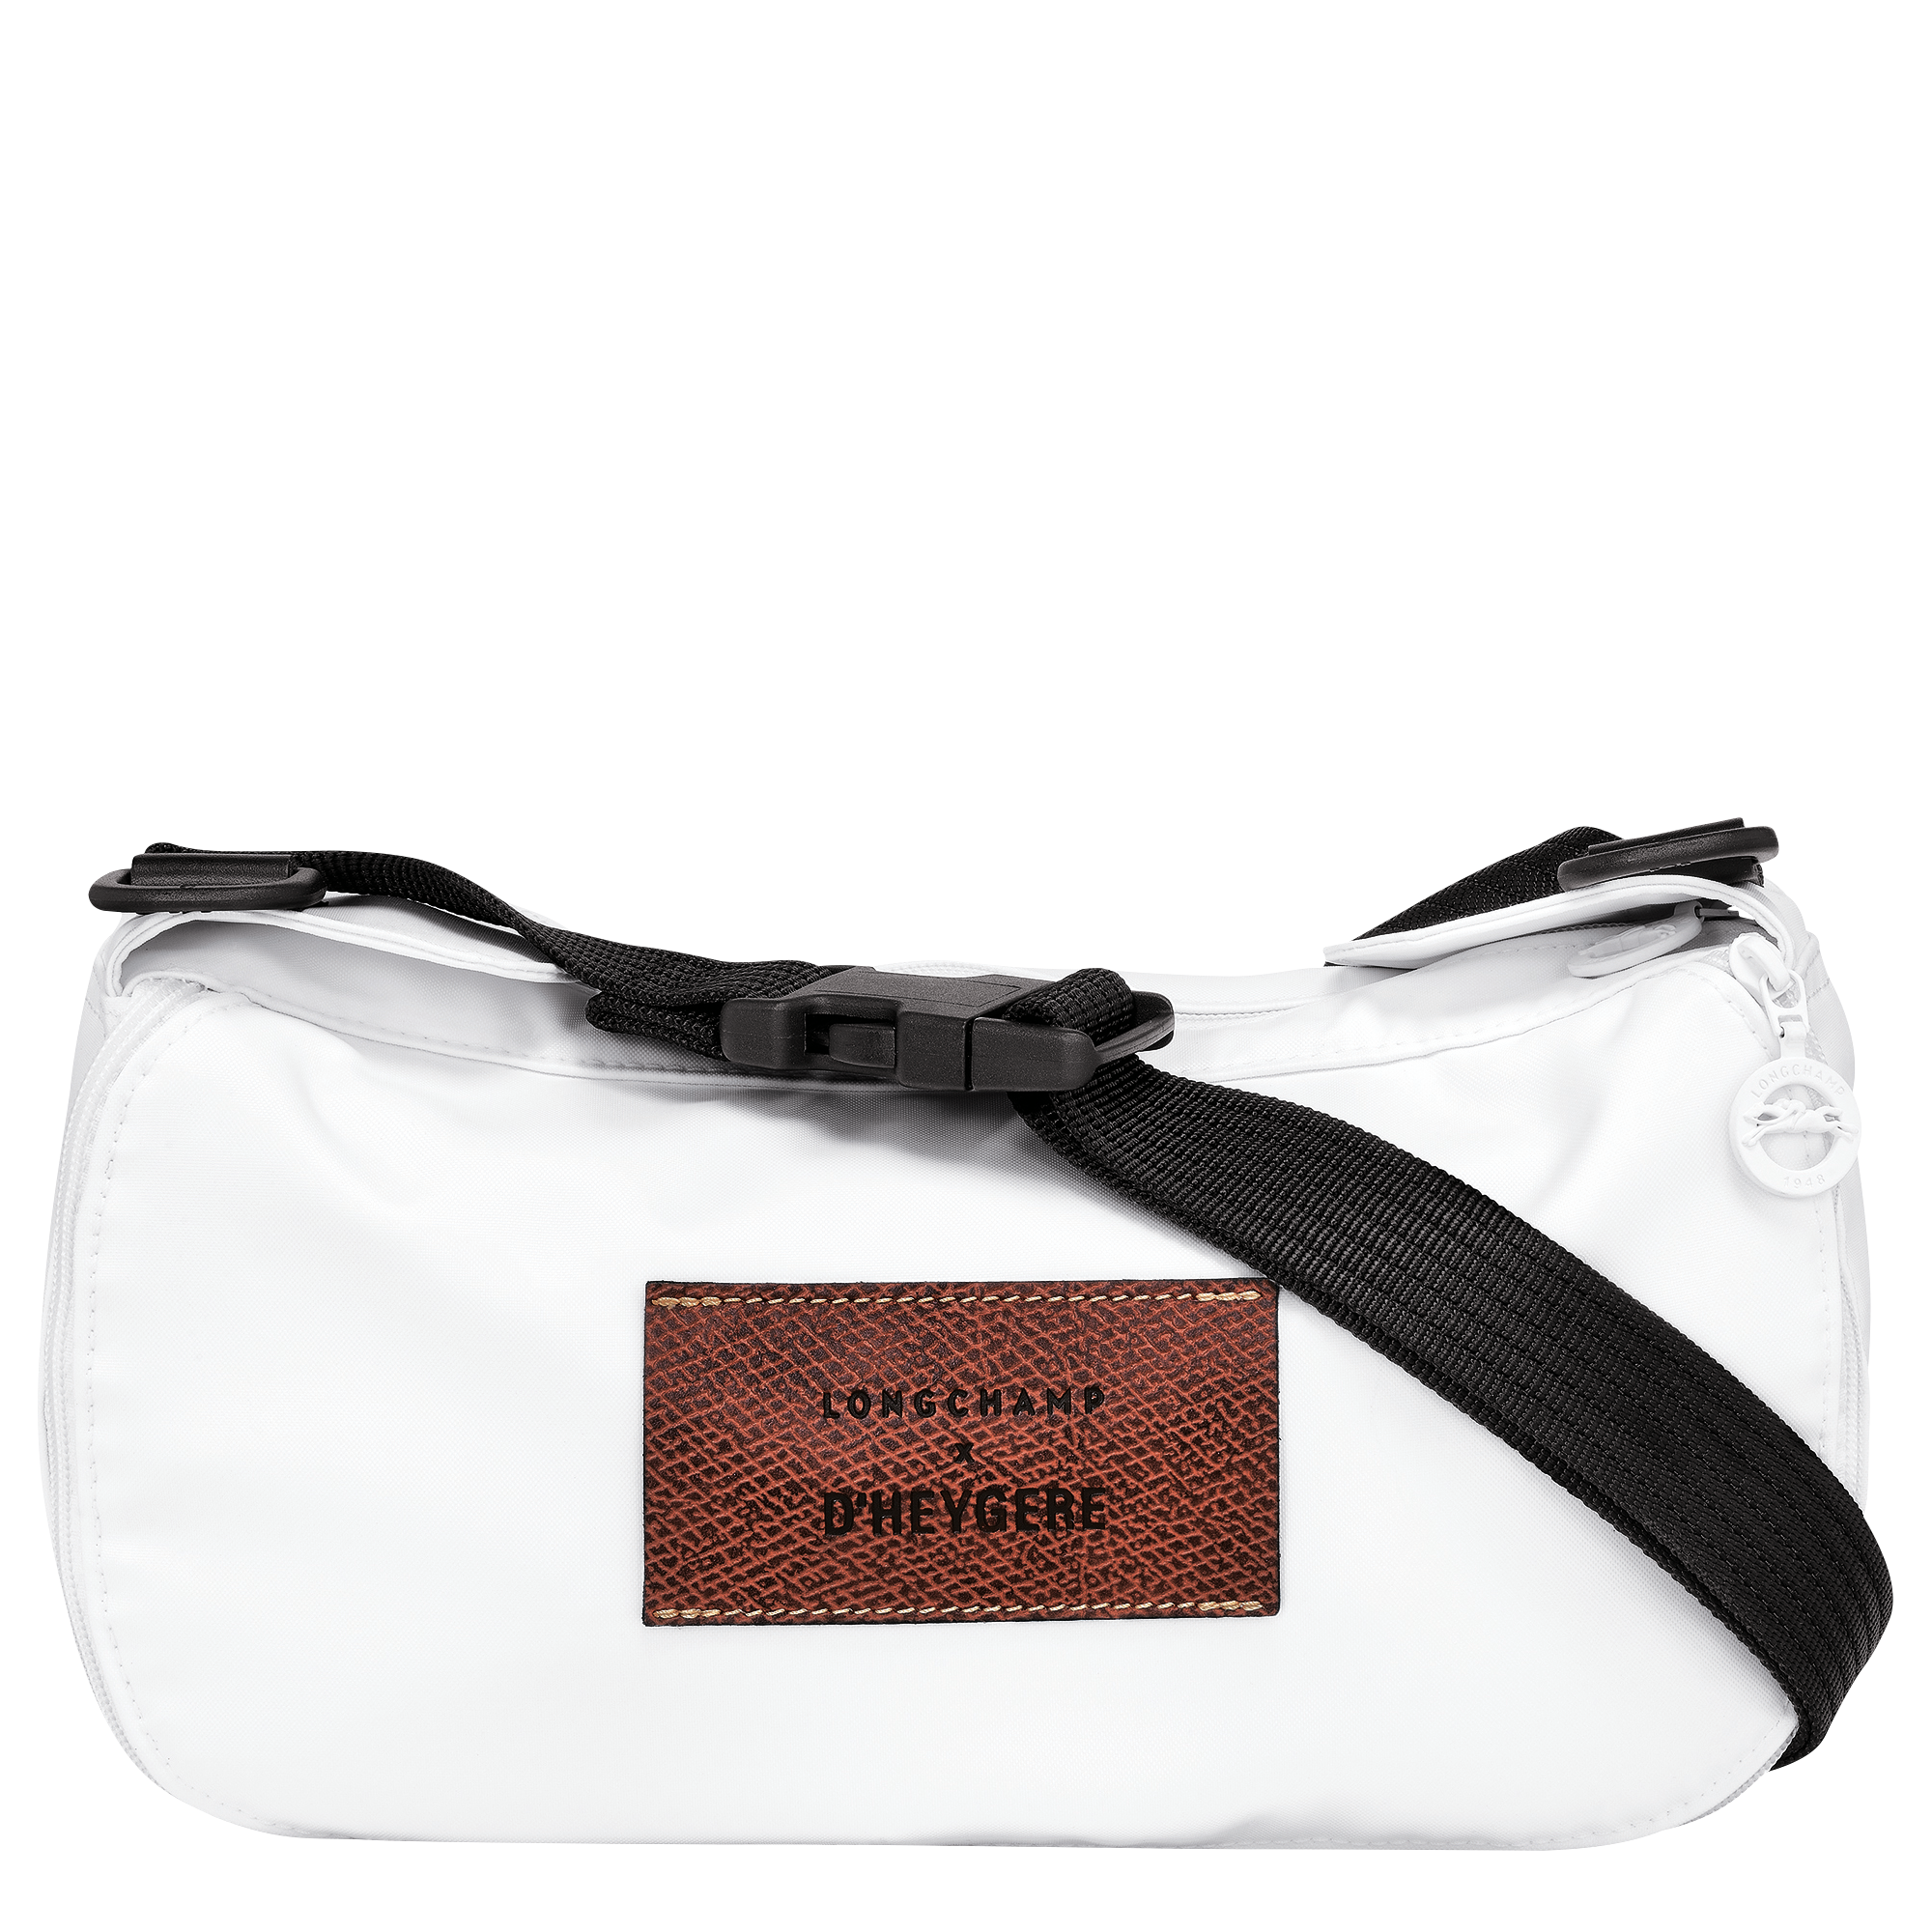 Longchamp X D_heygere white crossbody bag-backpack Php 25,500.png